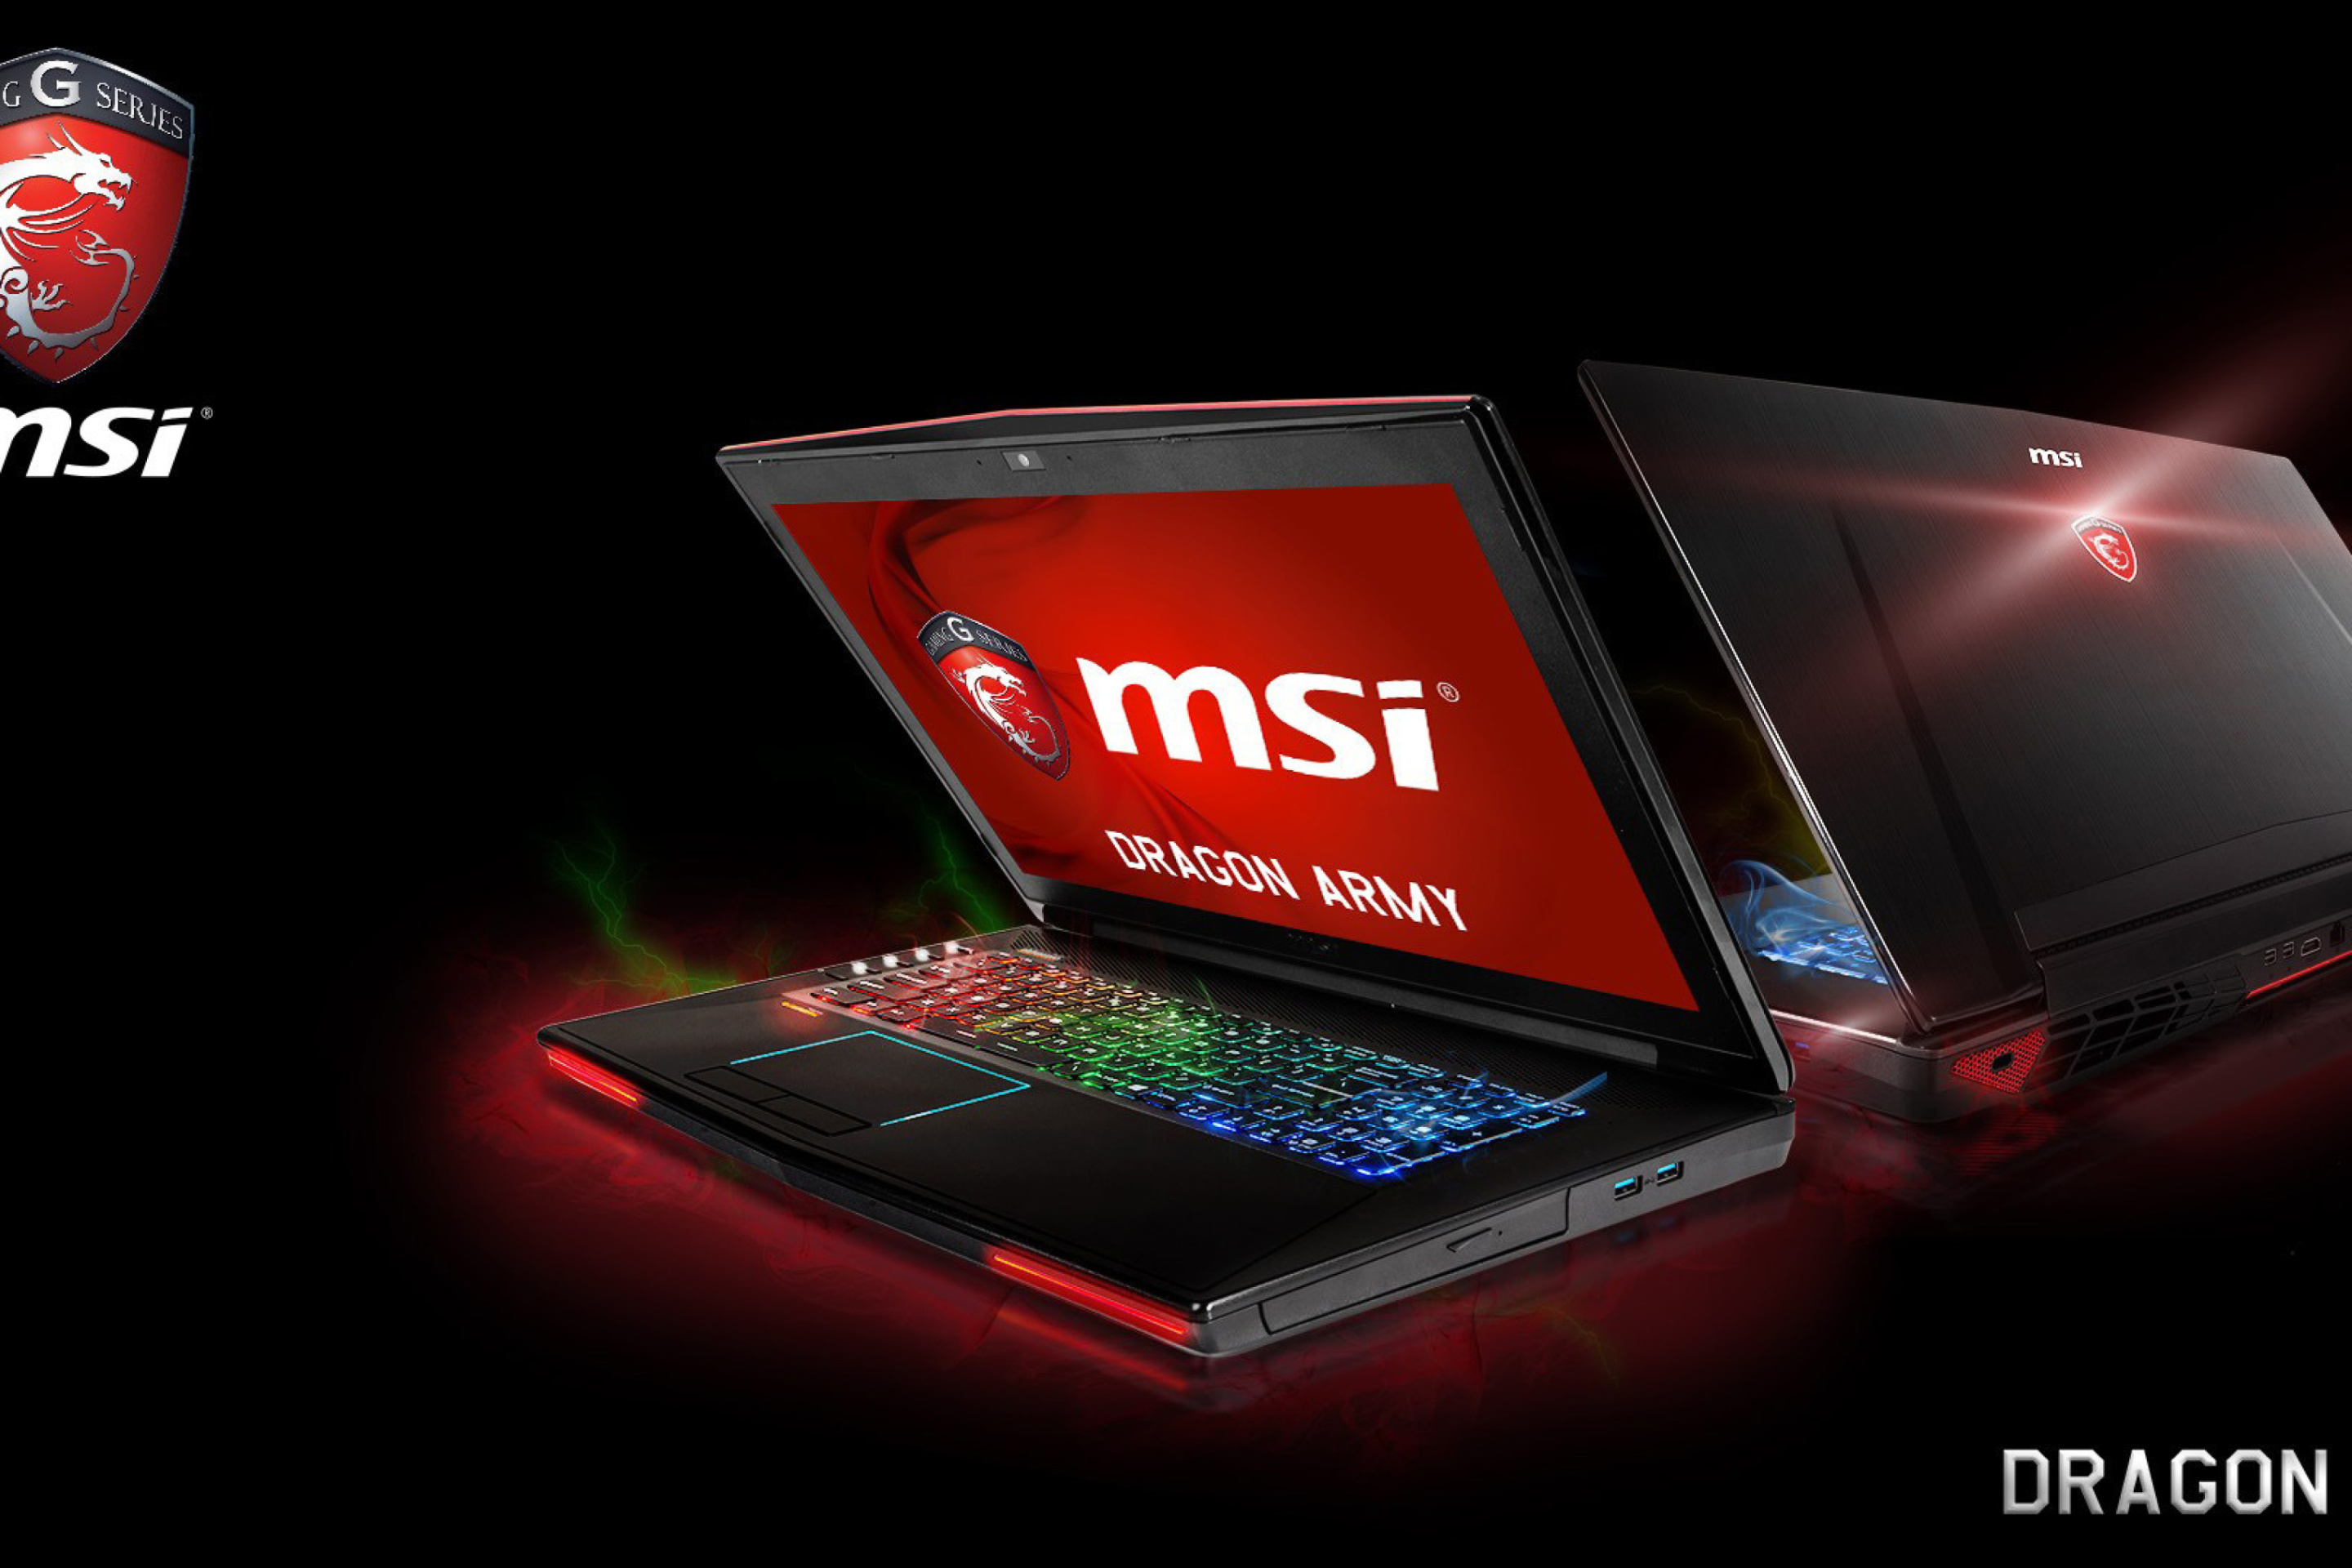 Product msi. MSI gf 72 Dominator. MSI 2k. Мсай ноутбук игровой. MSI Dragon ноутбук.